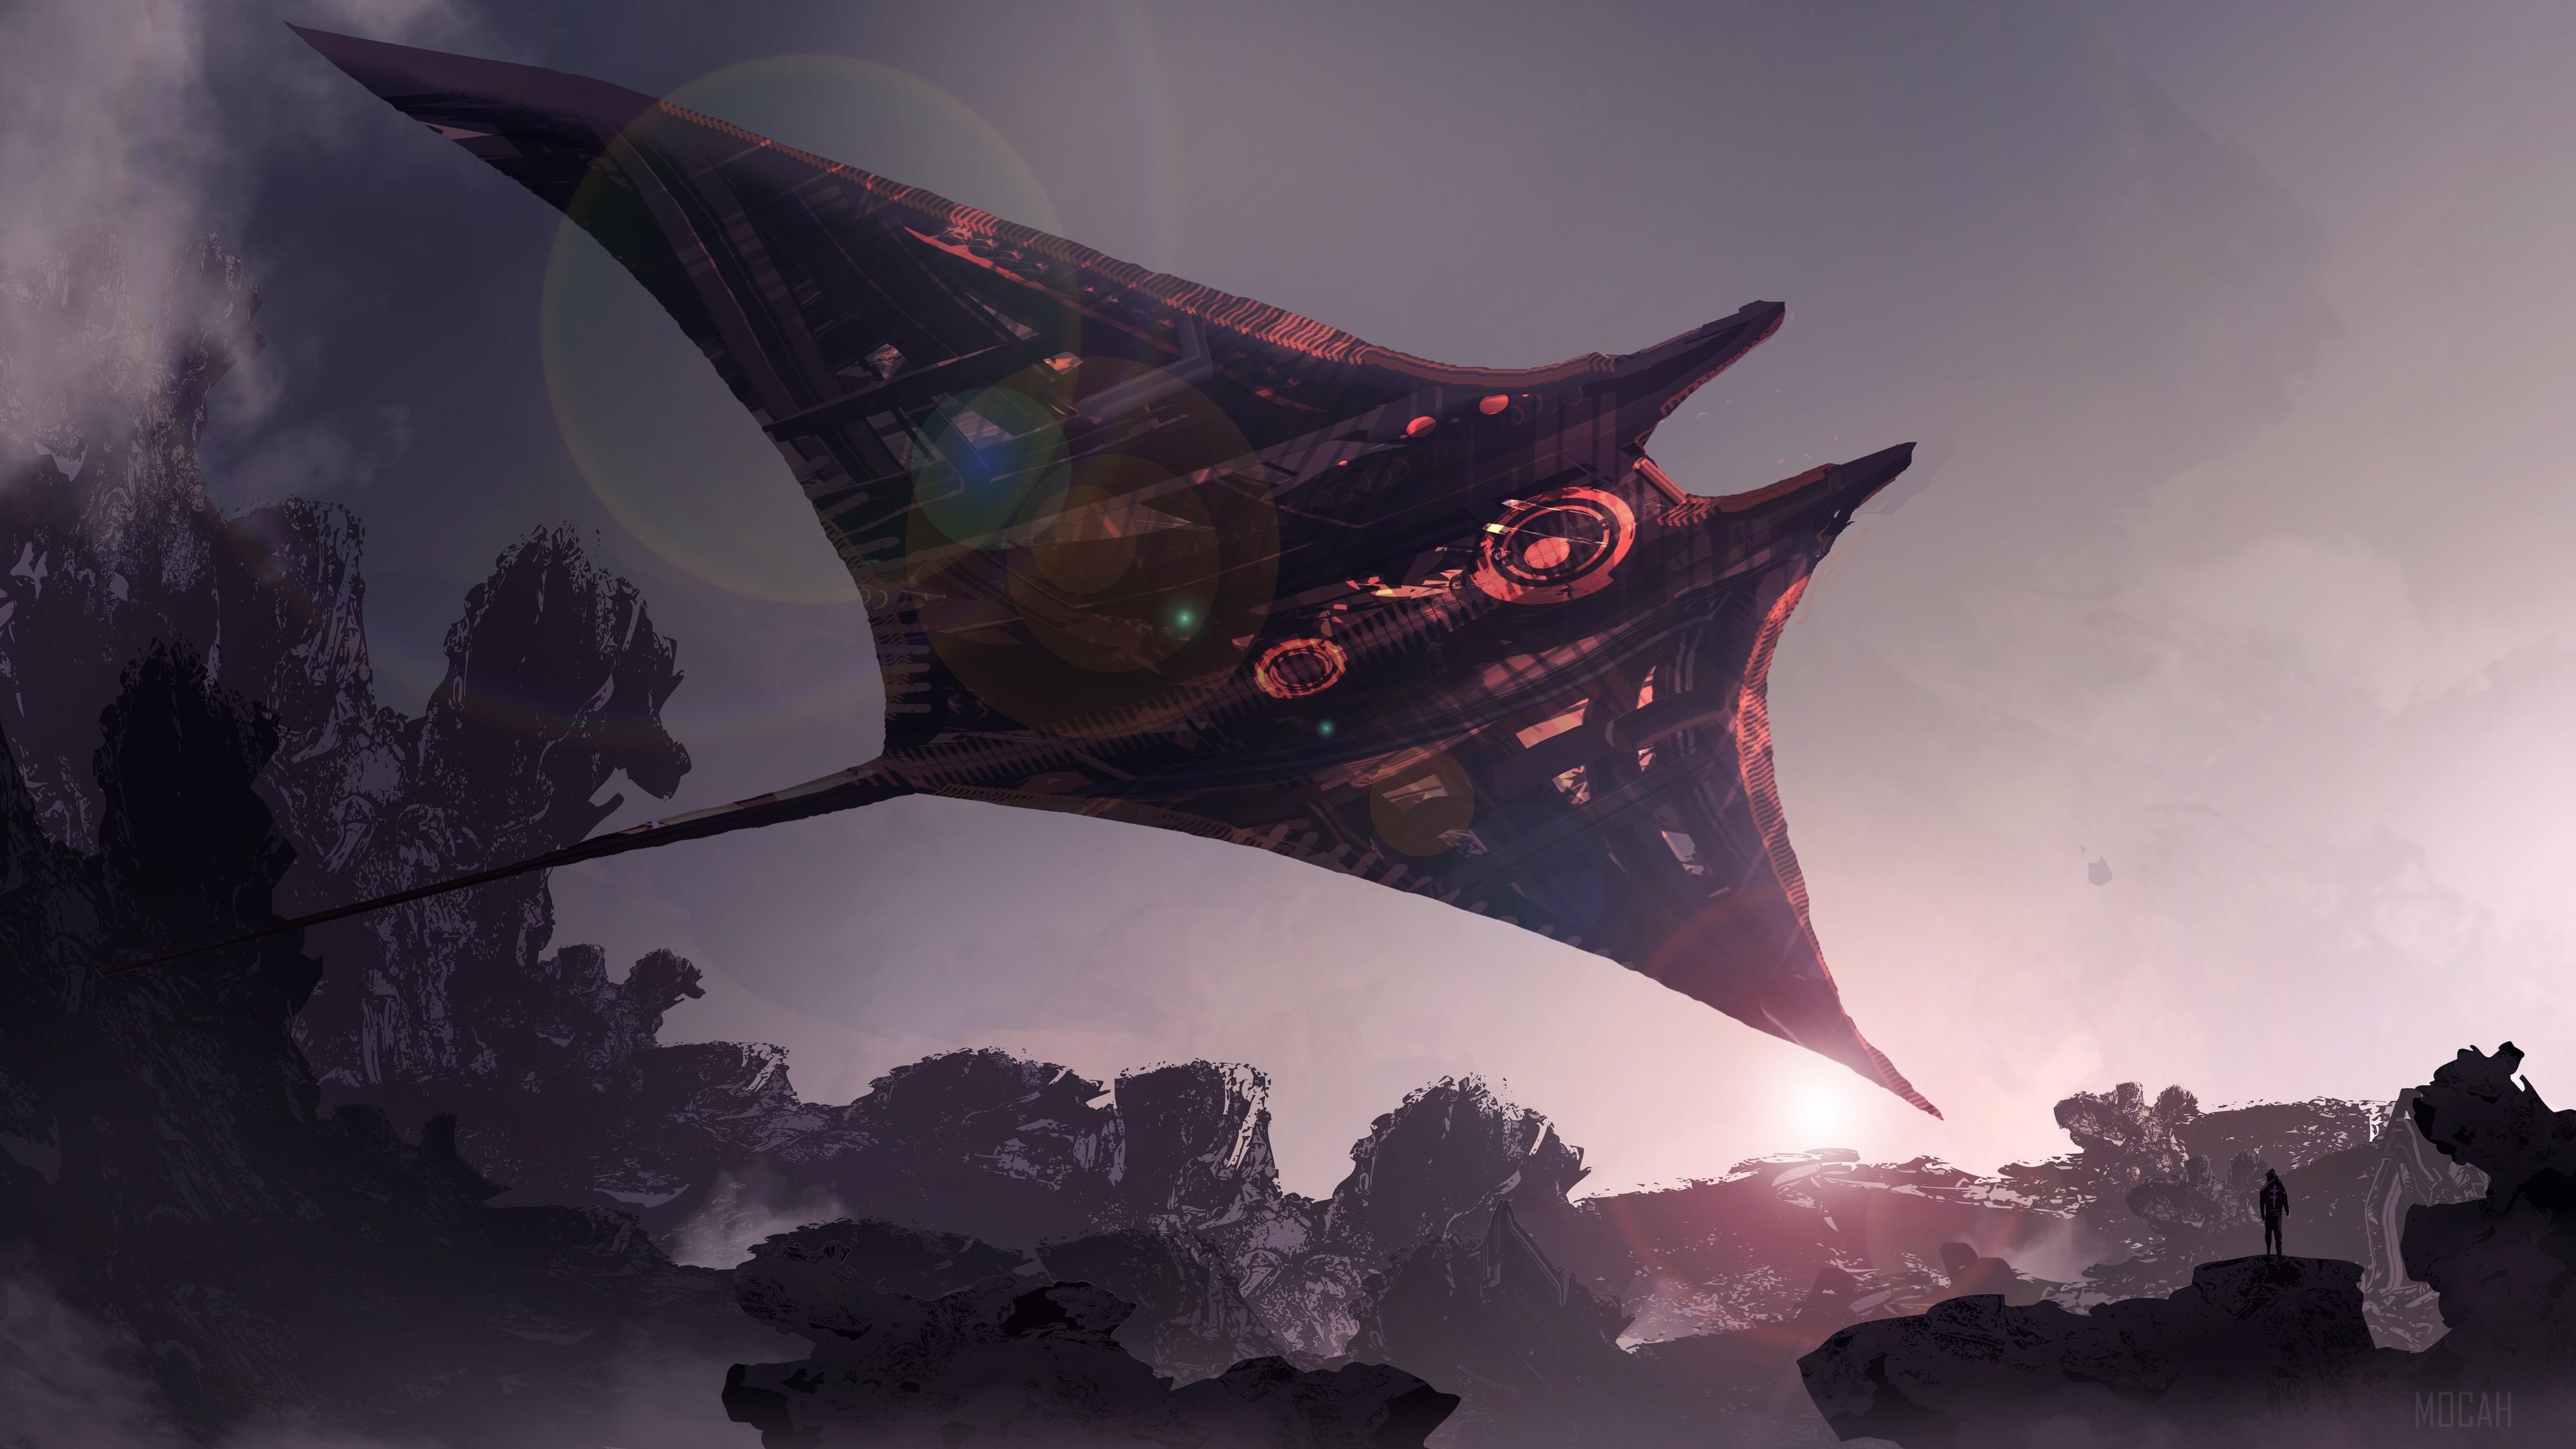 HD wallpaper, Futuristic Spaceship Science Fiction Digital Art 4K